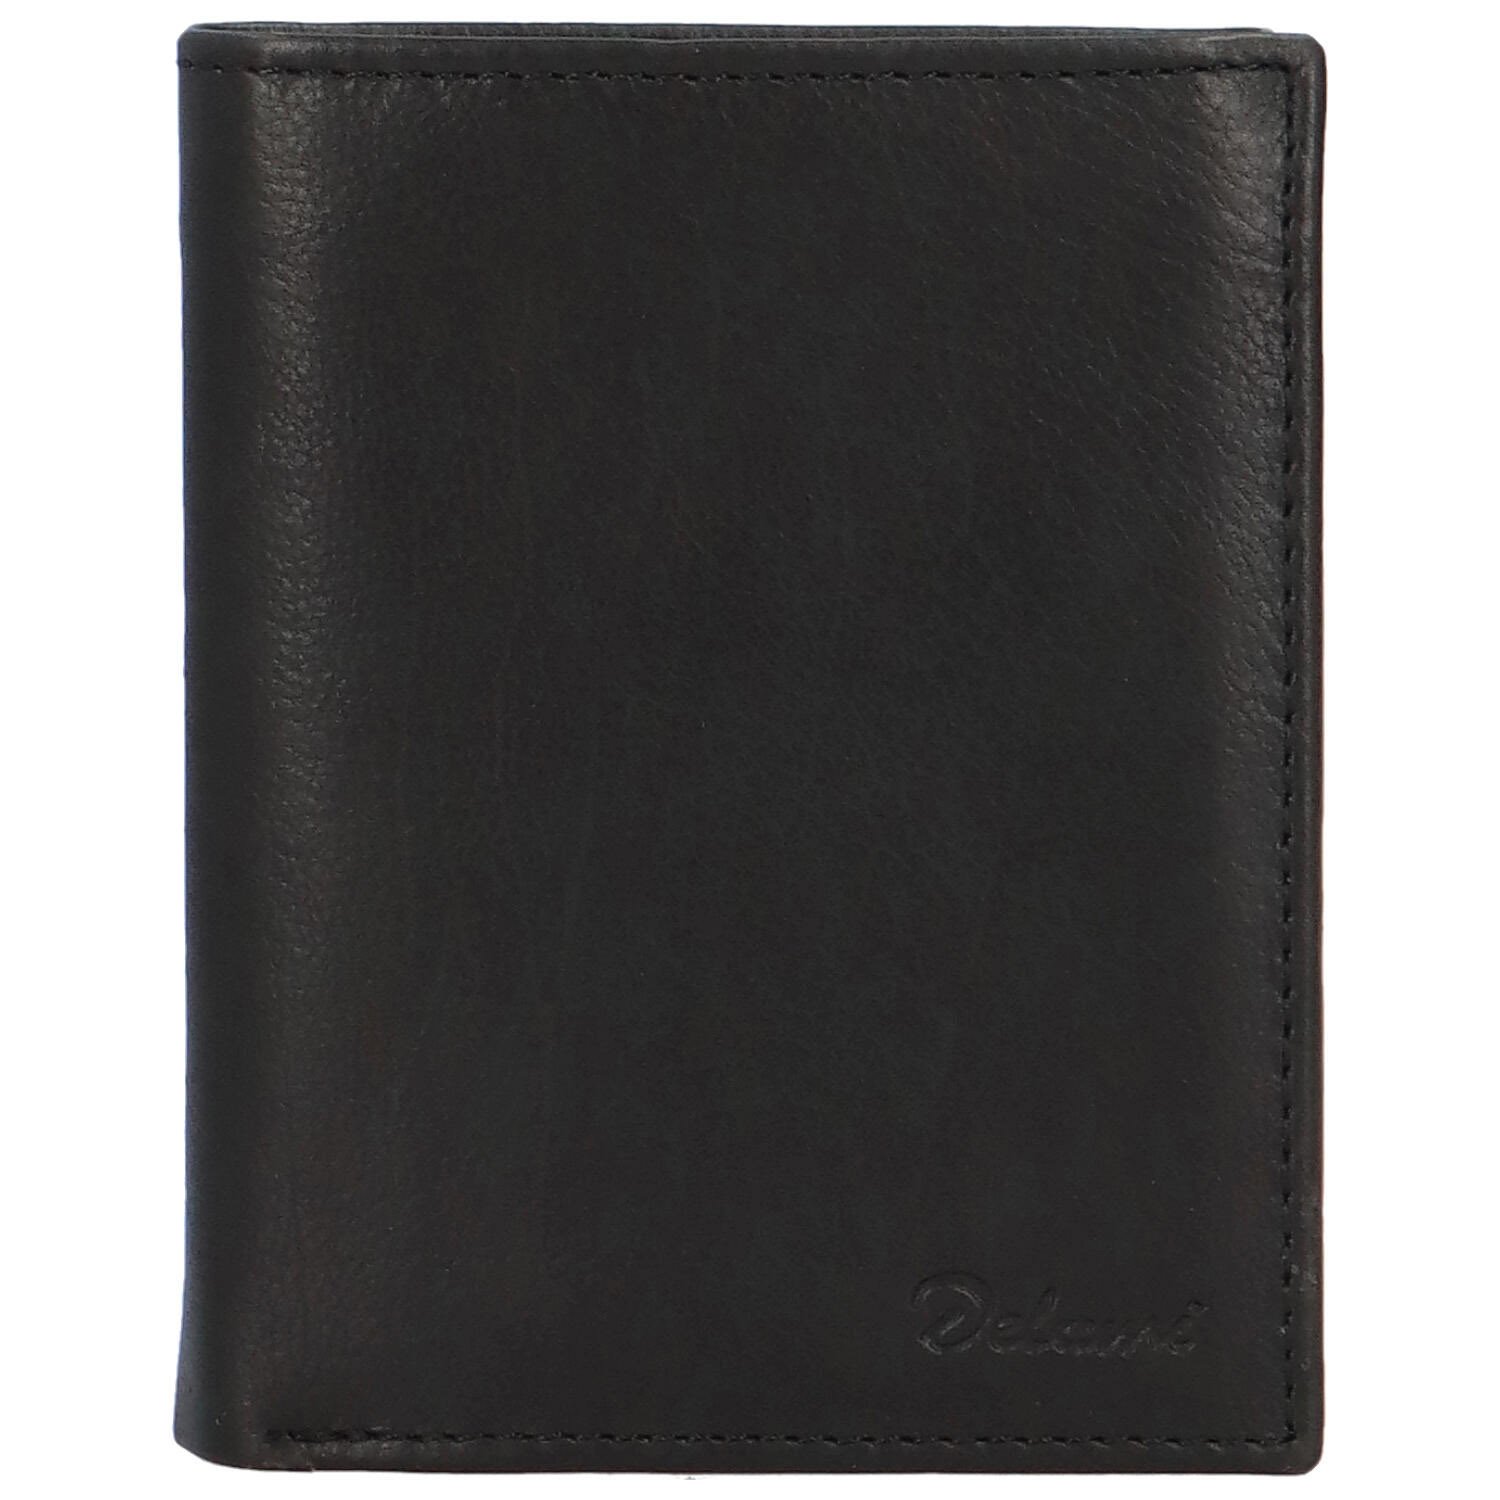 Pánská kožená peněženka Delami Tadeus, černá